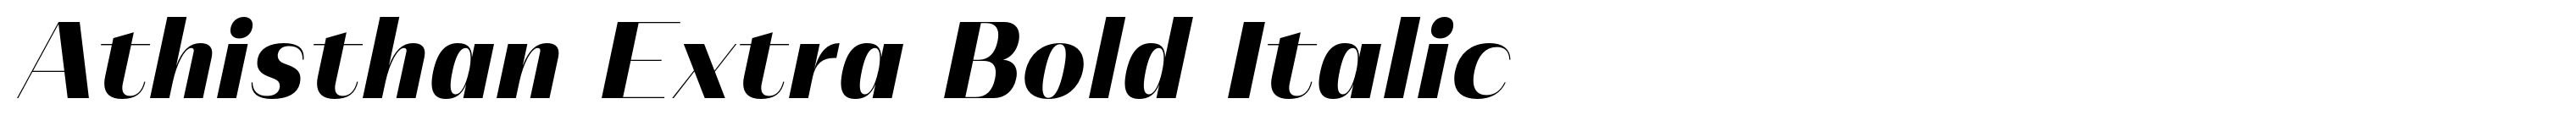 Athisthan Extra Bold Italic